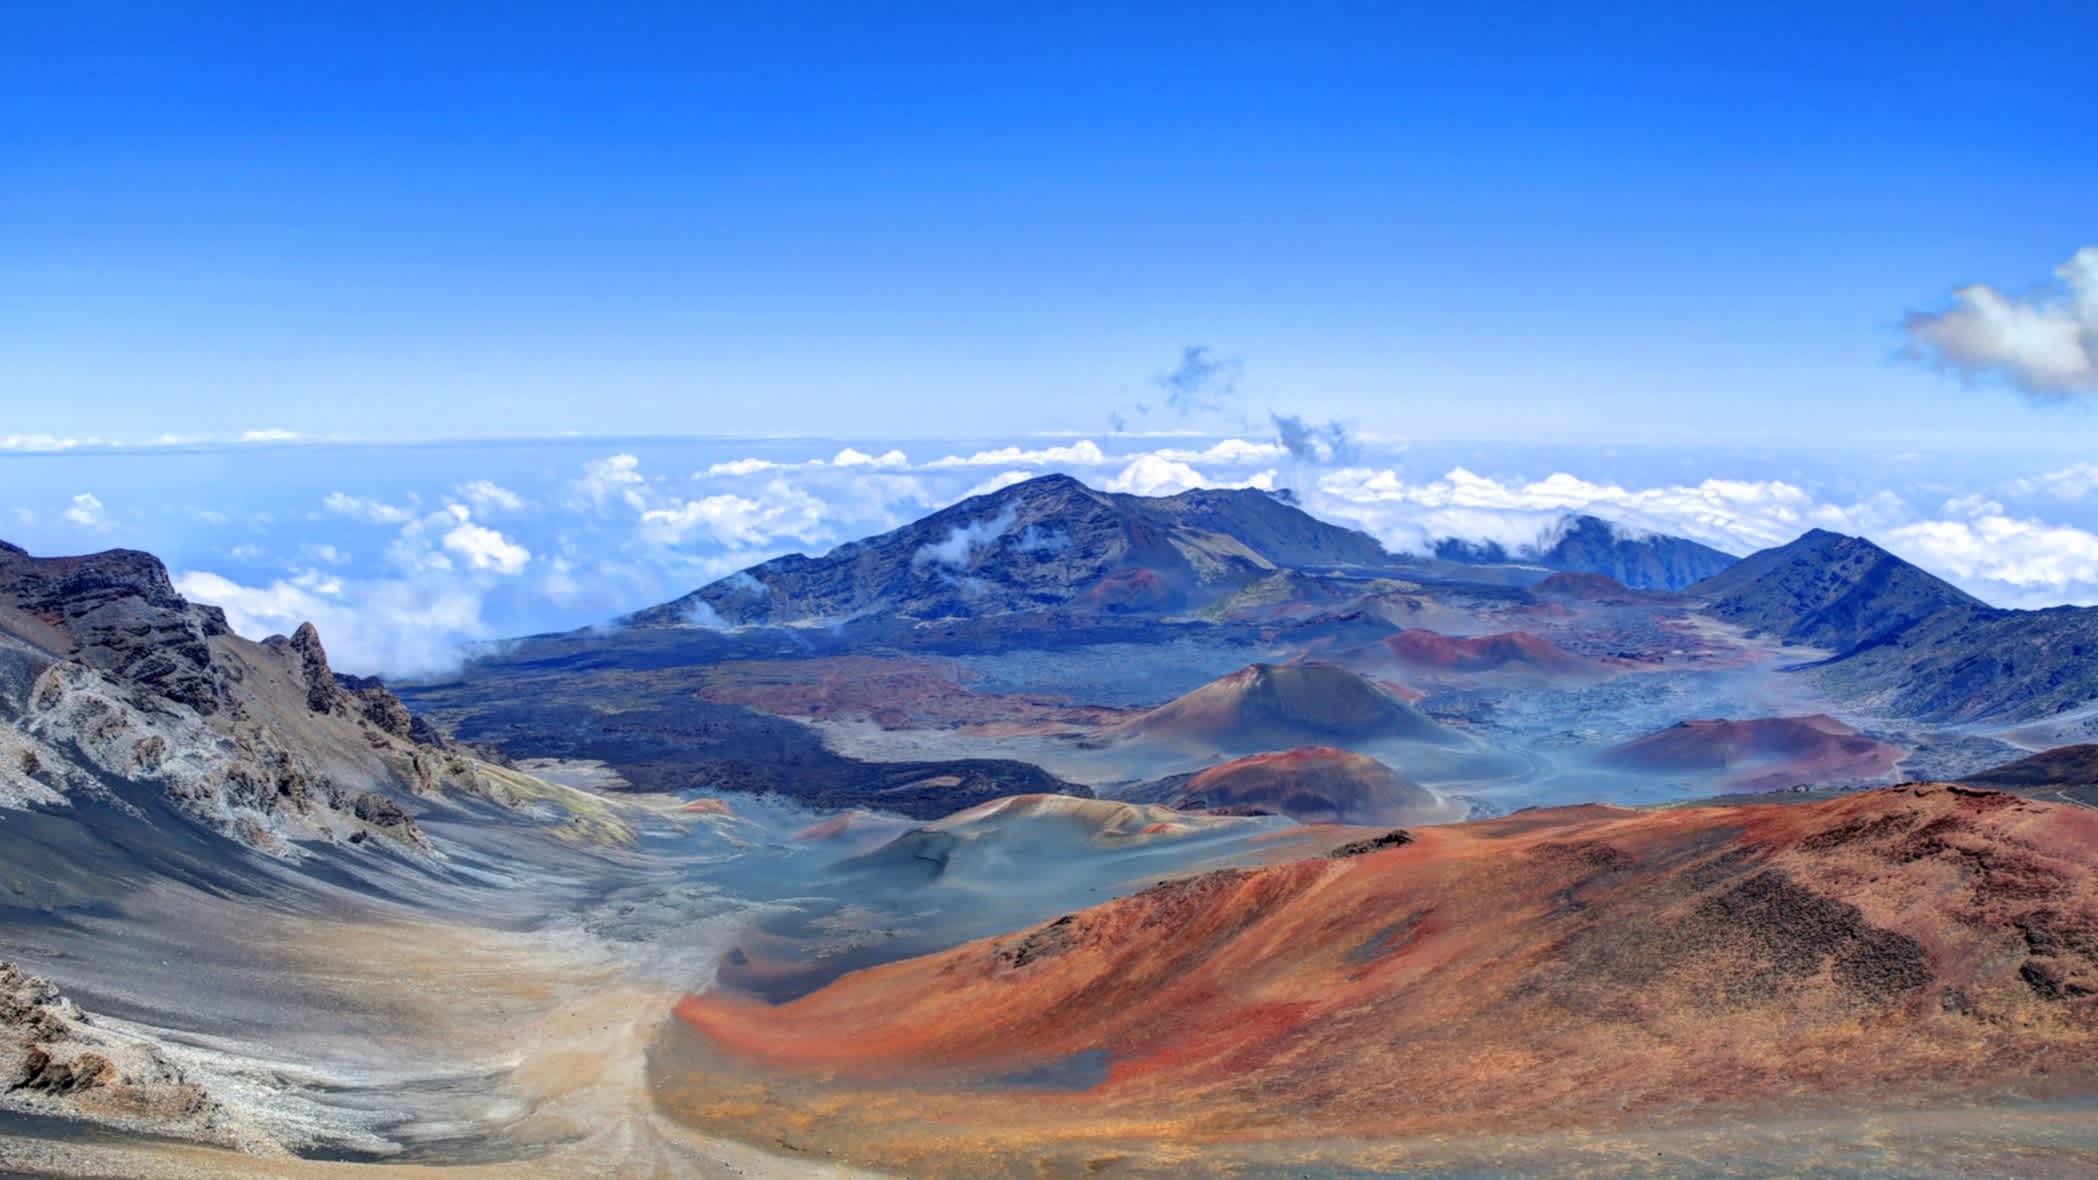 Blick auf den Haleakala Vulkankrater auf der hawaiianischen Insel Maui, USA. 